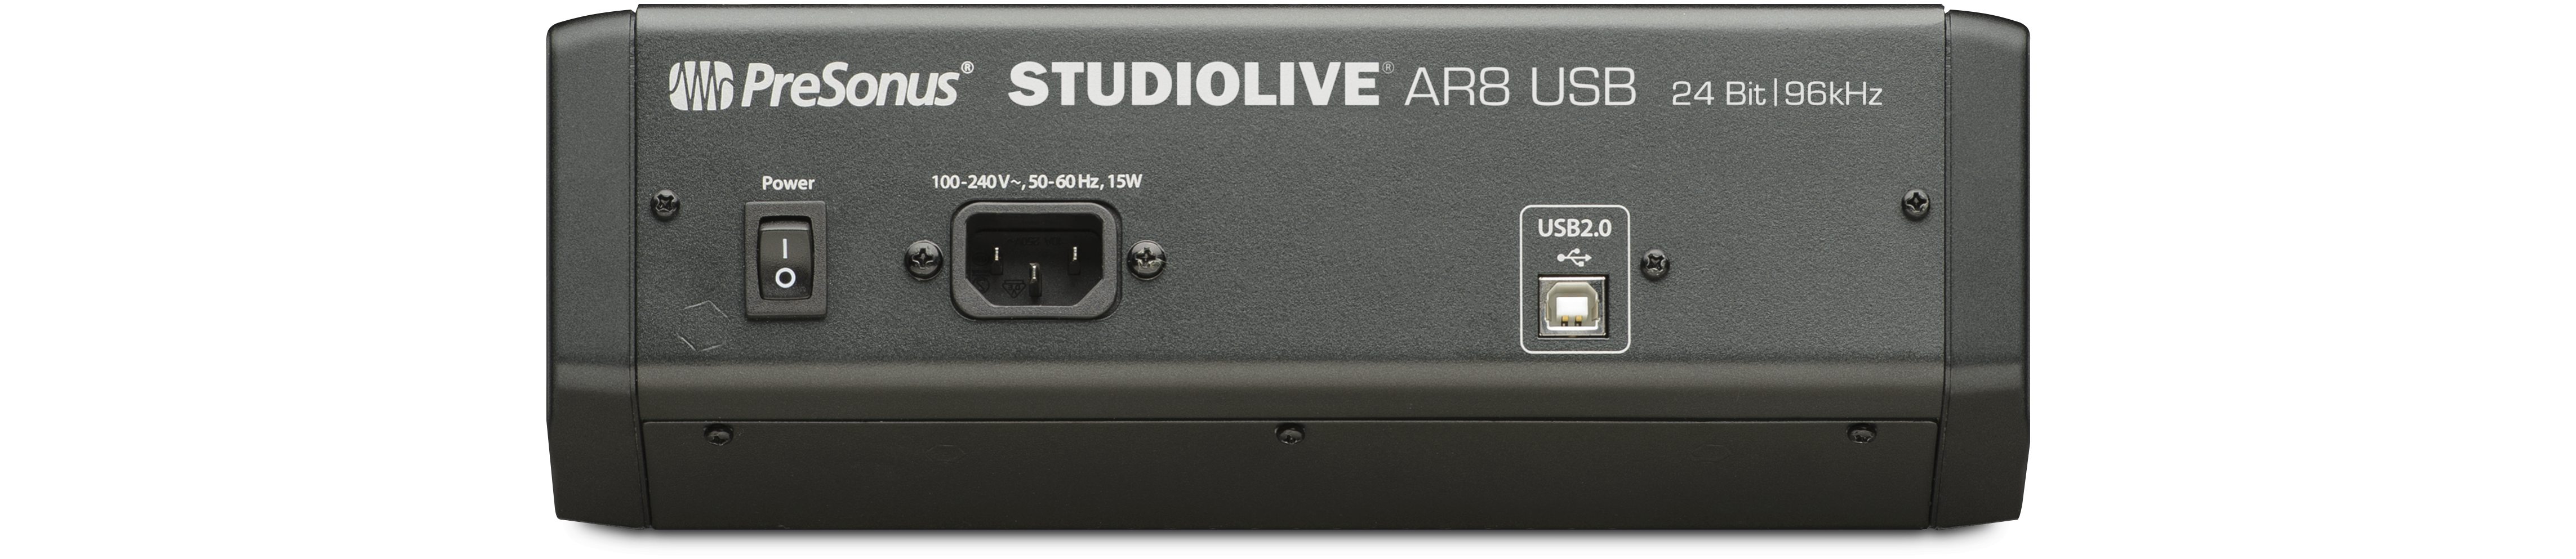 StudioLive AR8c